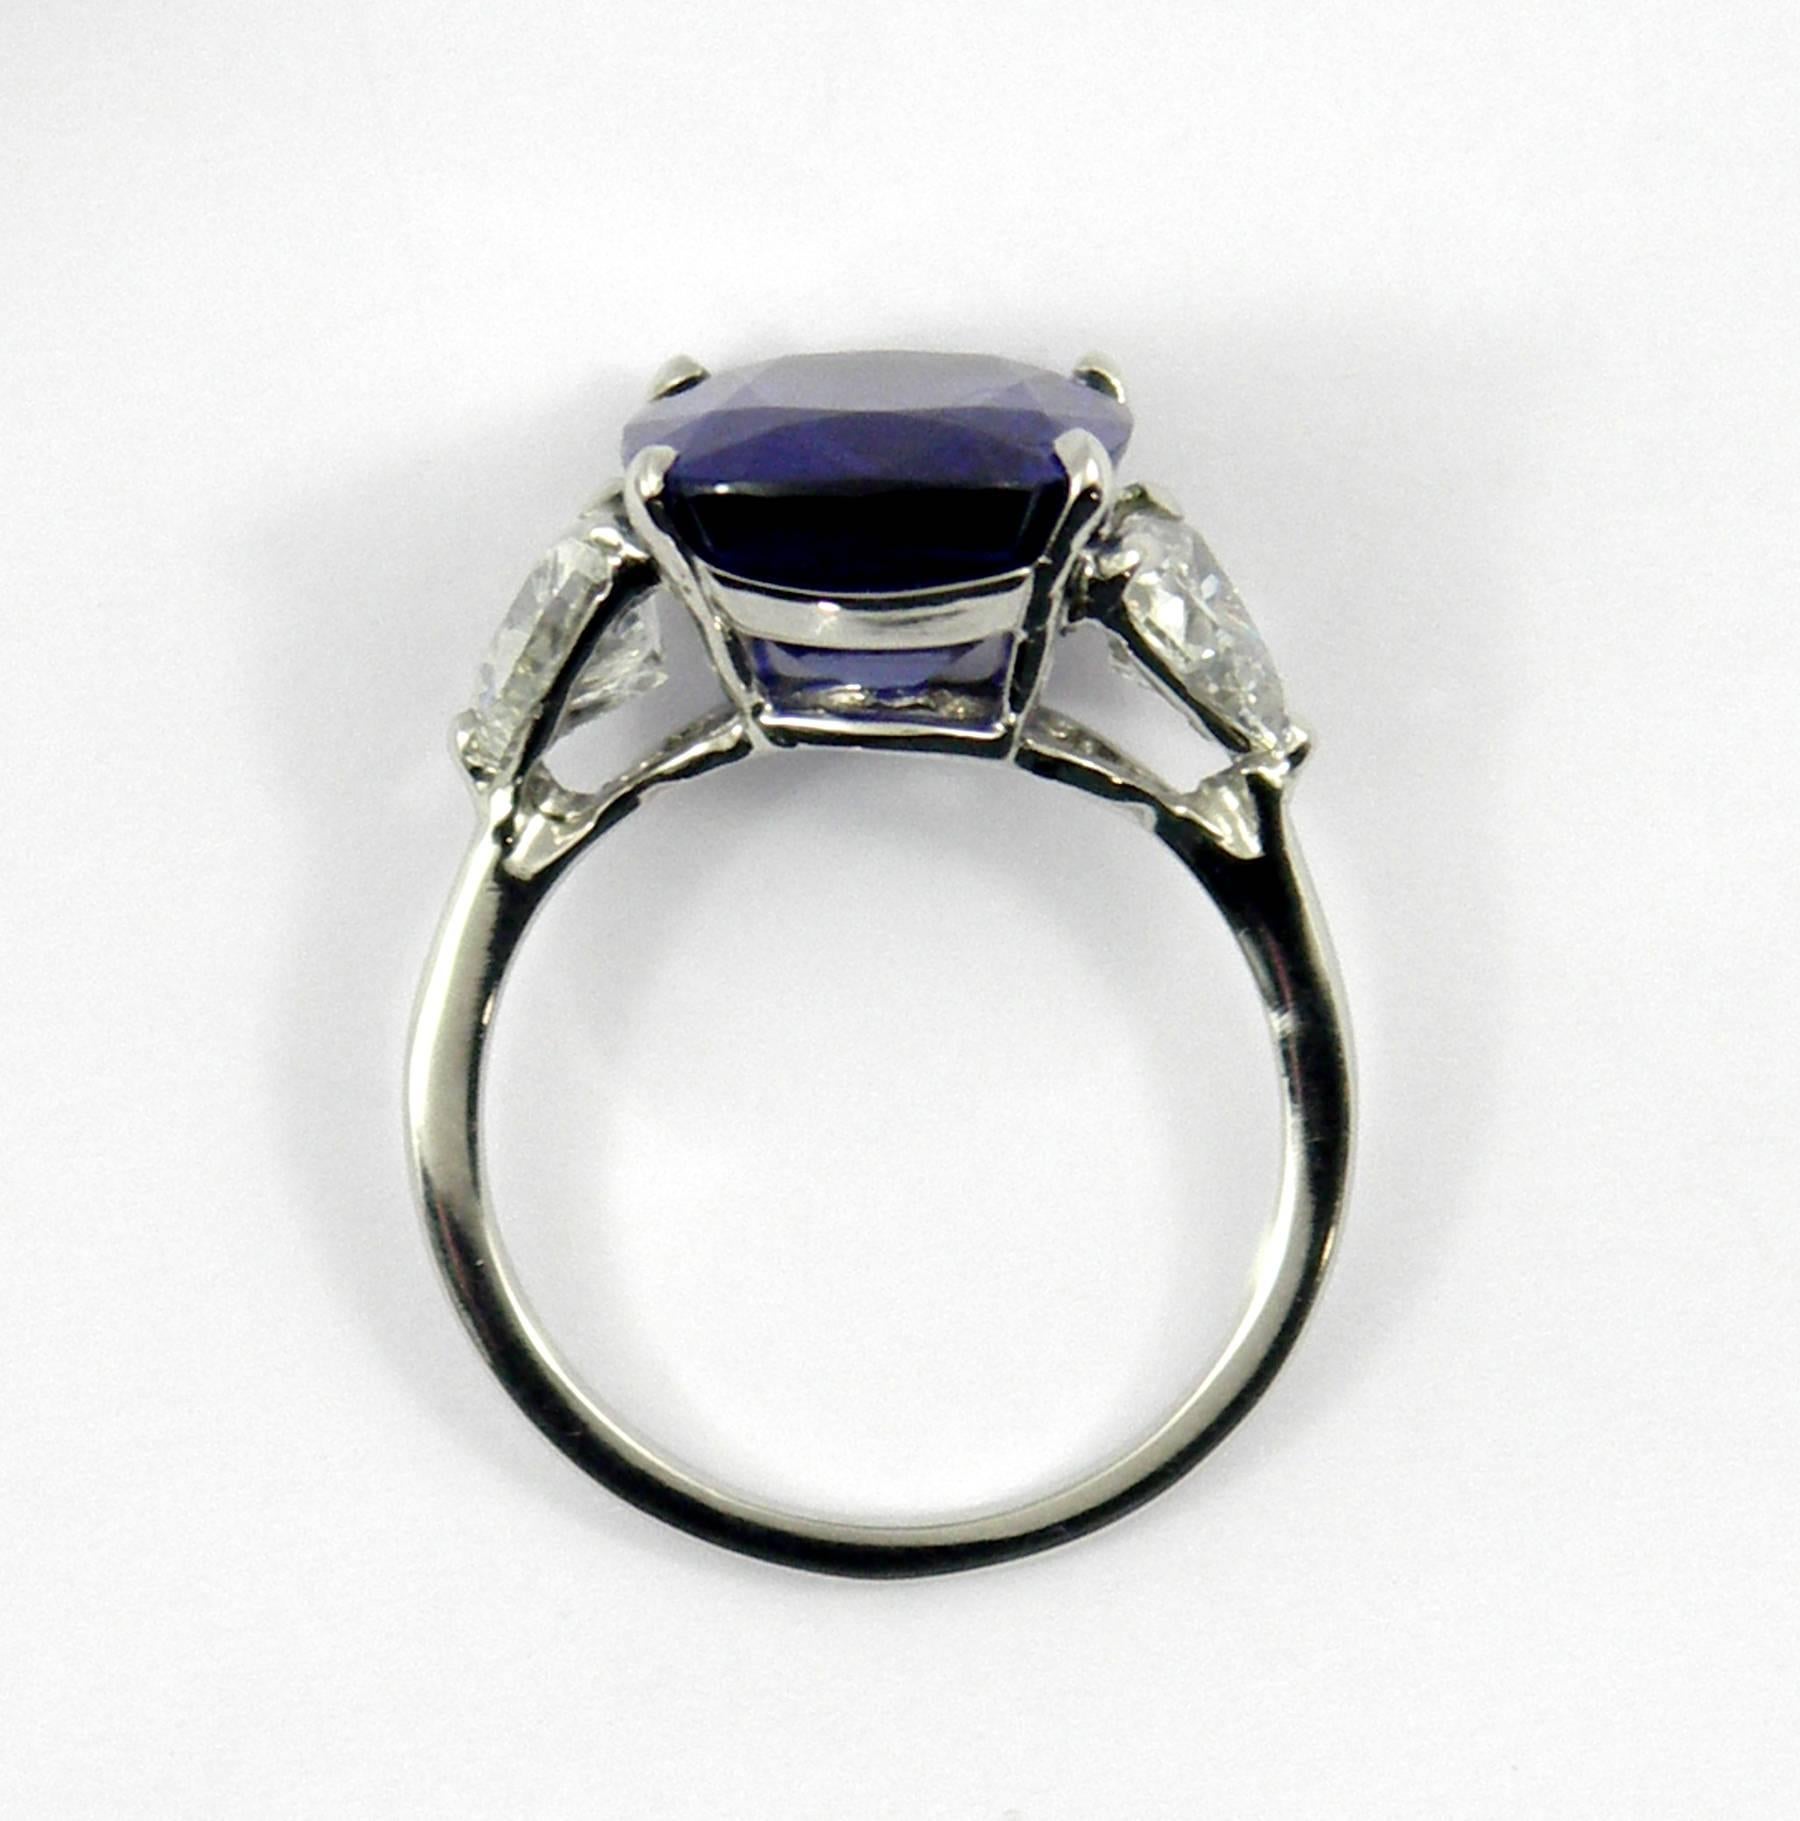 A.G.L. Certified 7.32 Carat Cushion Cut Sapphire Diamond Ring 5